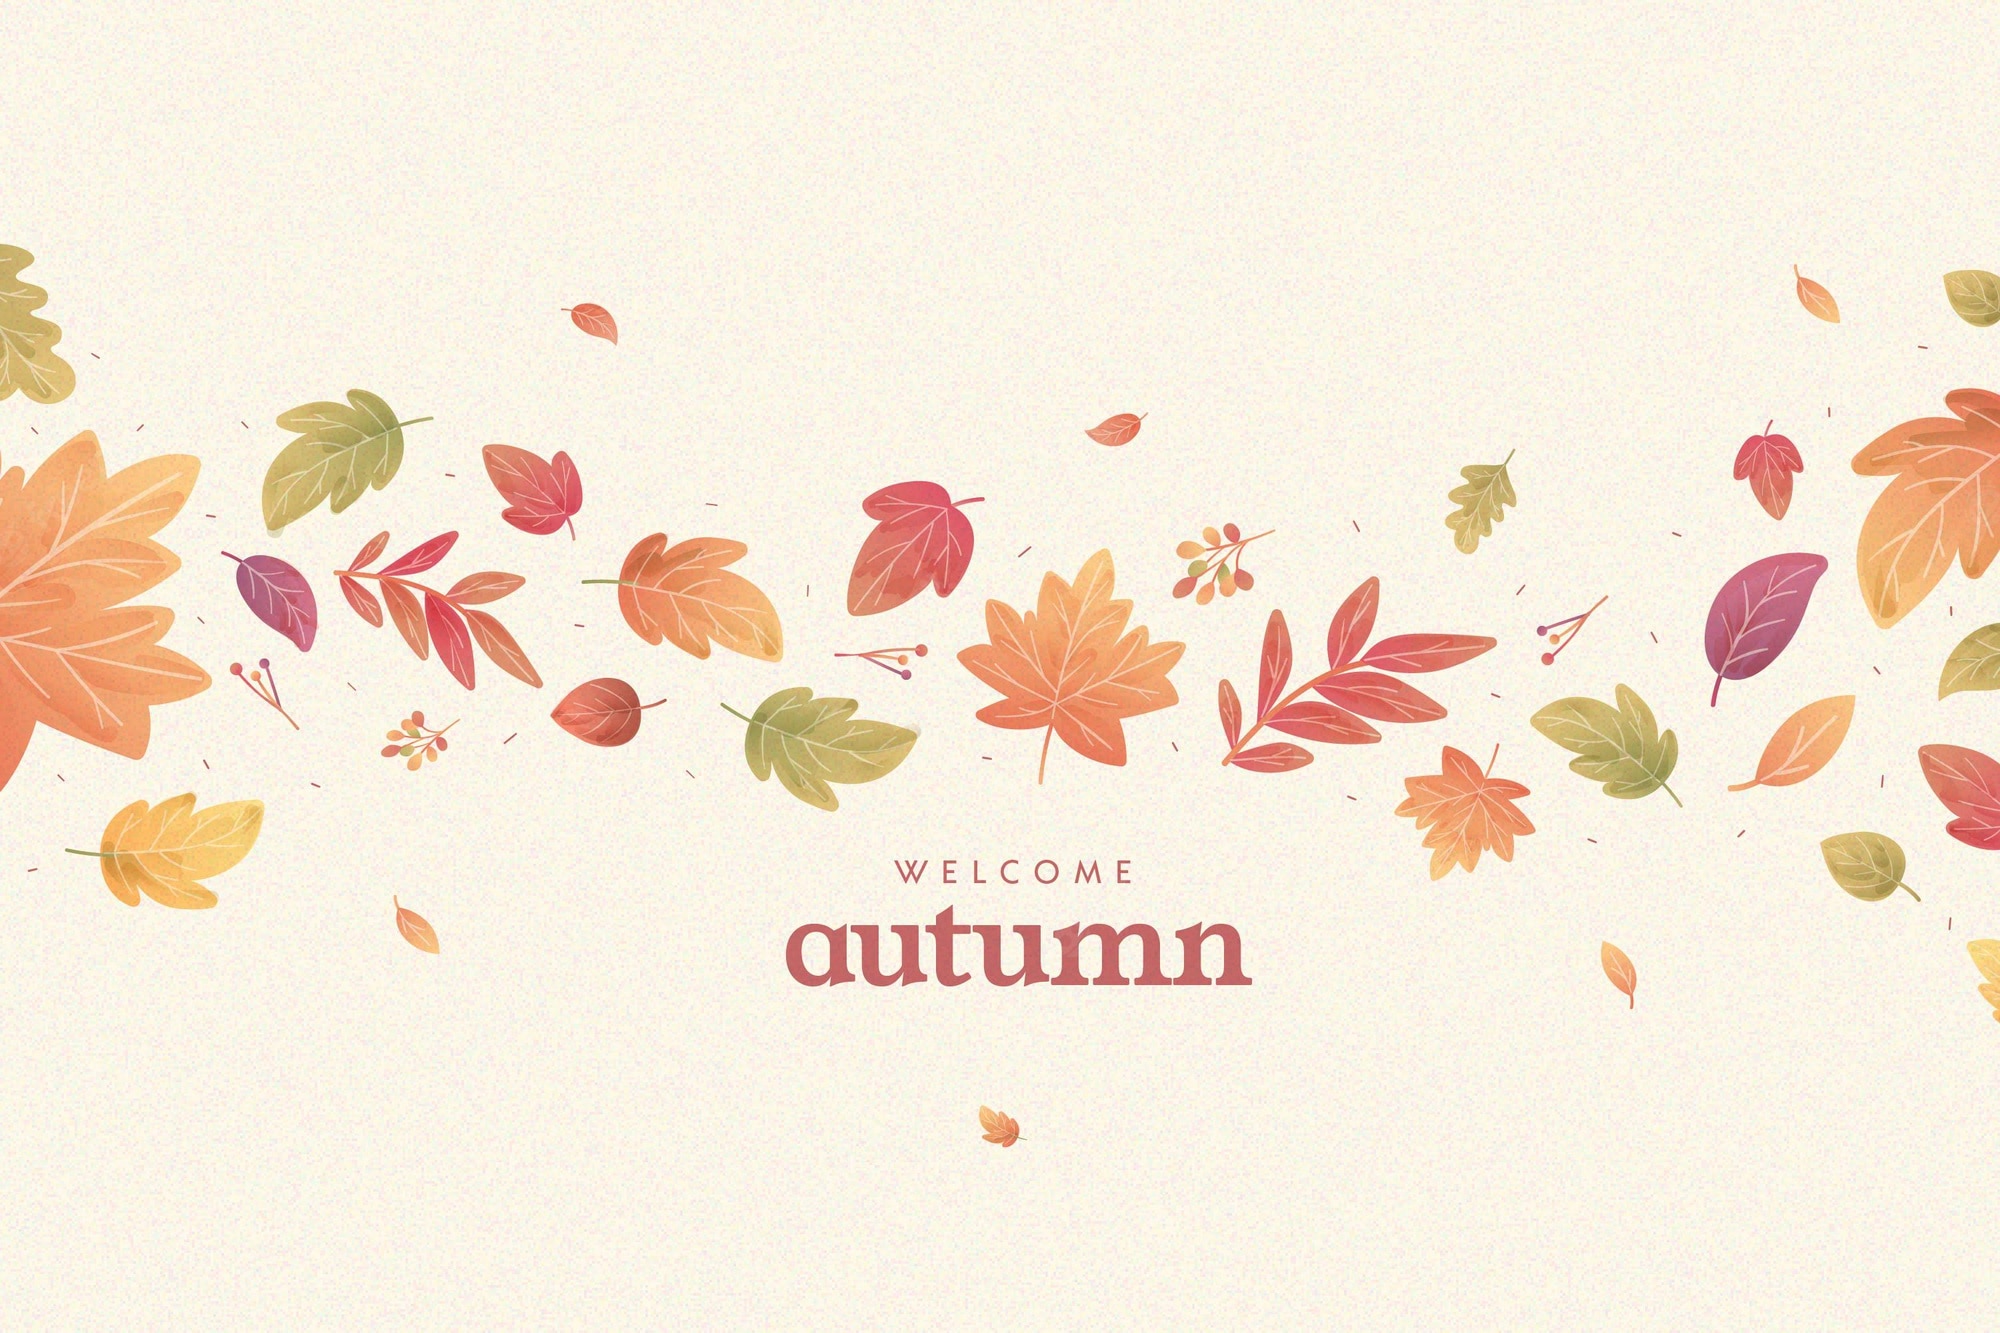 Autumn Image. Free Vectors, & PSD